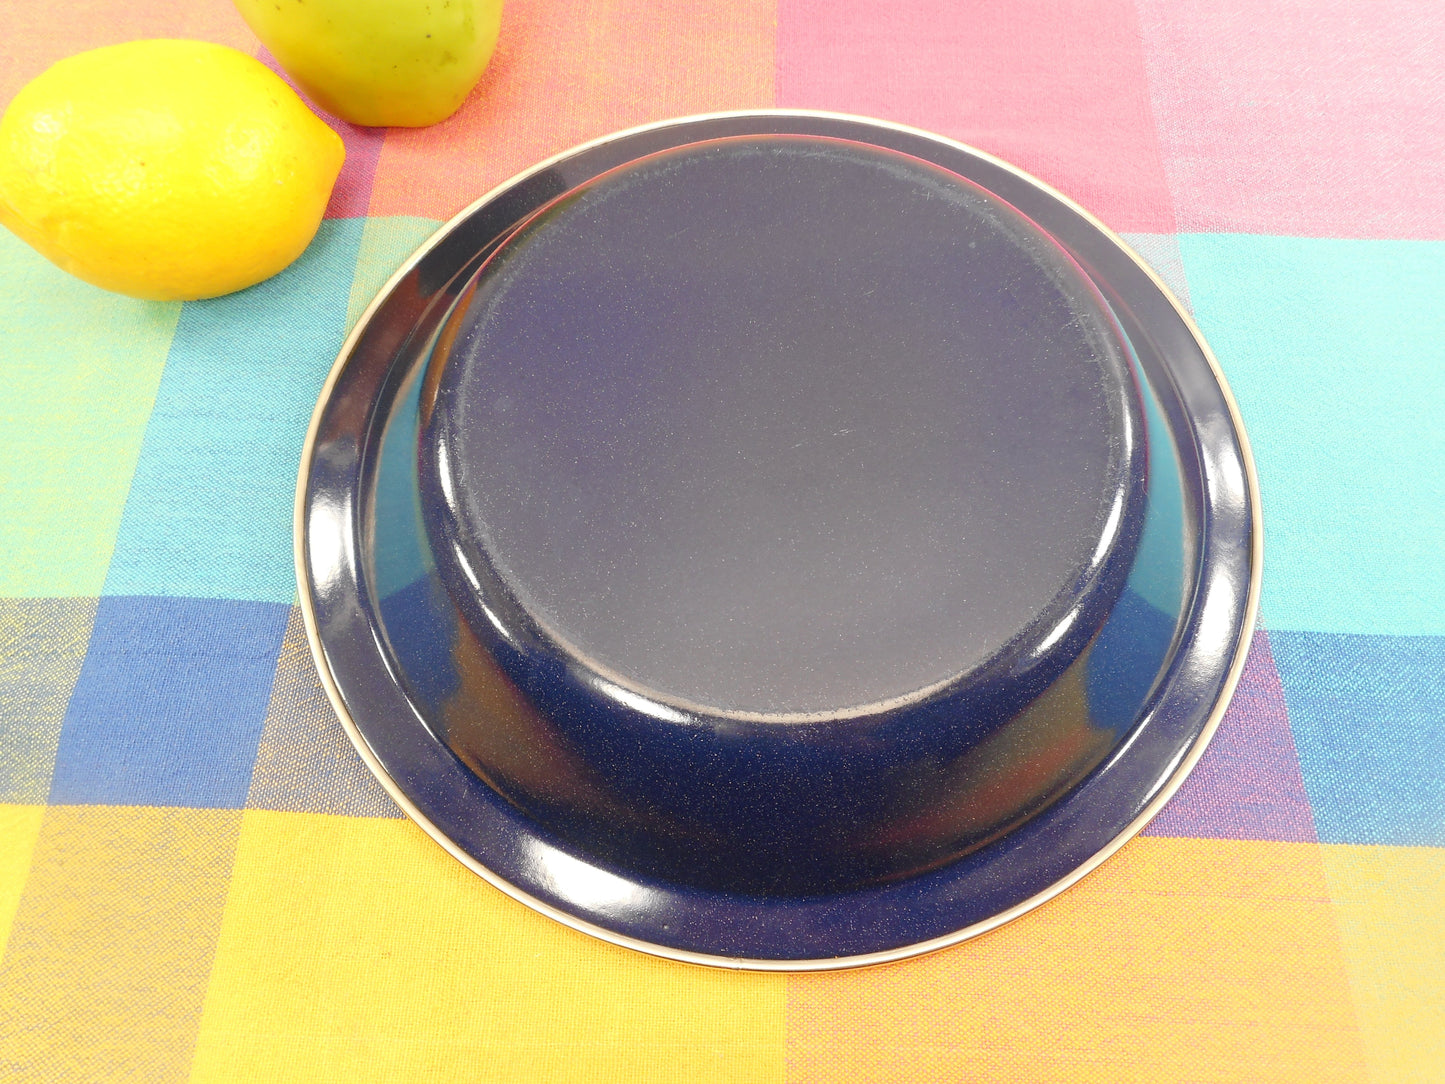 Unbranded Blue Enamelware 10" Pie Plate Pan Dish - Stainless Rim Used